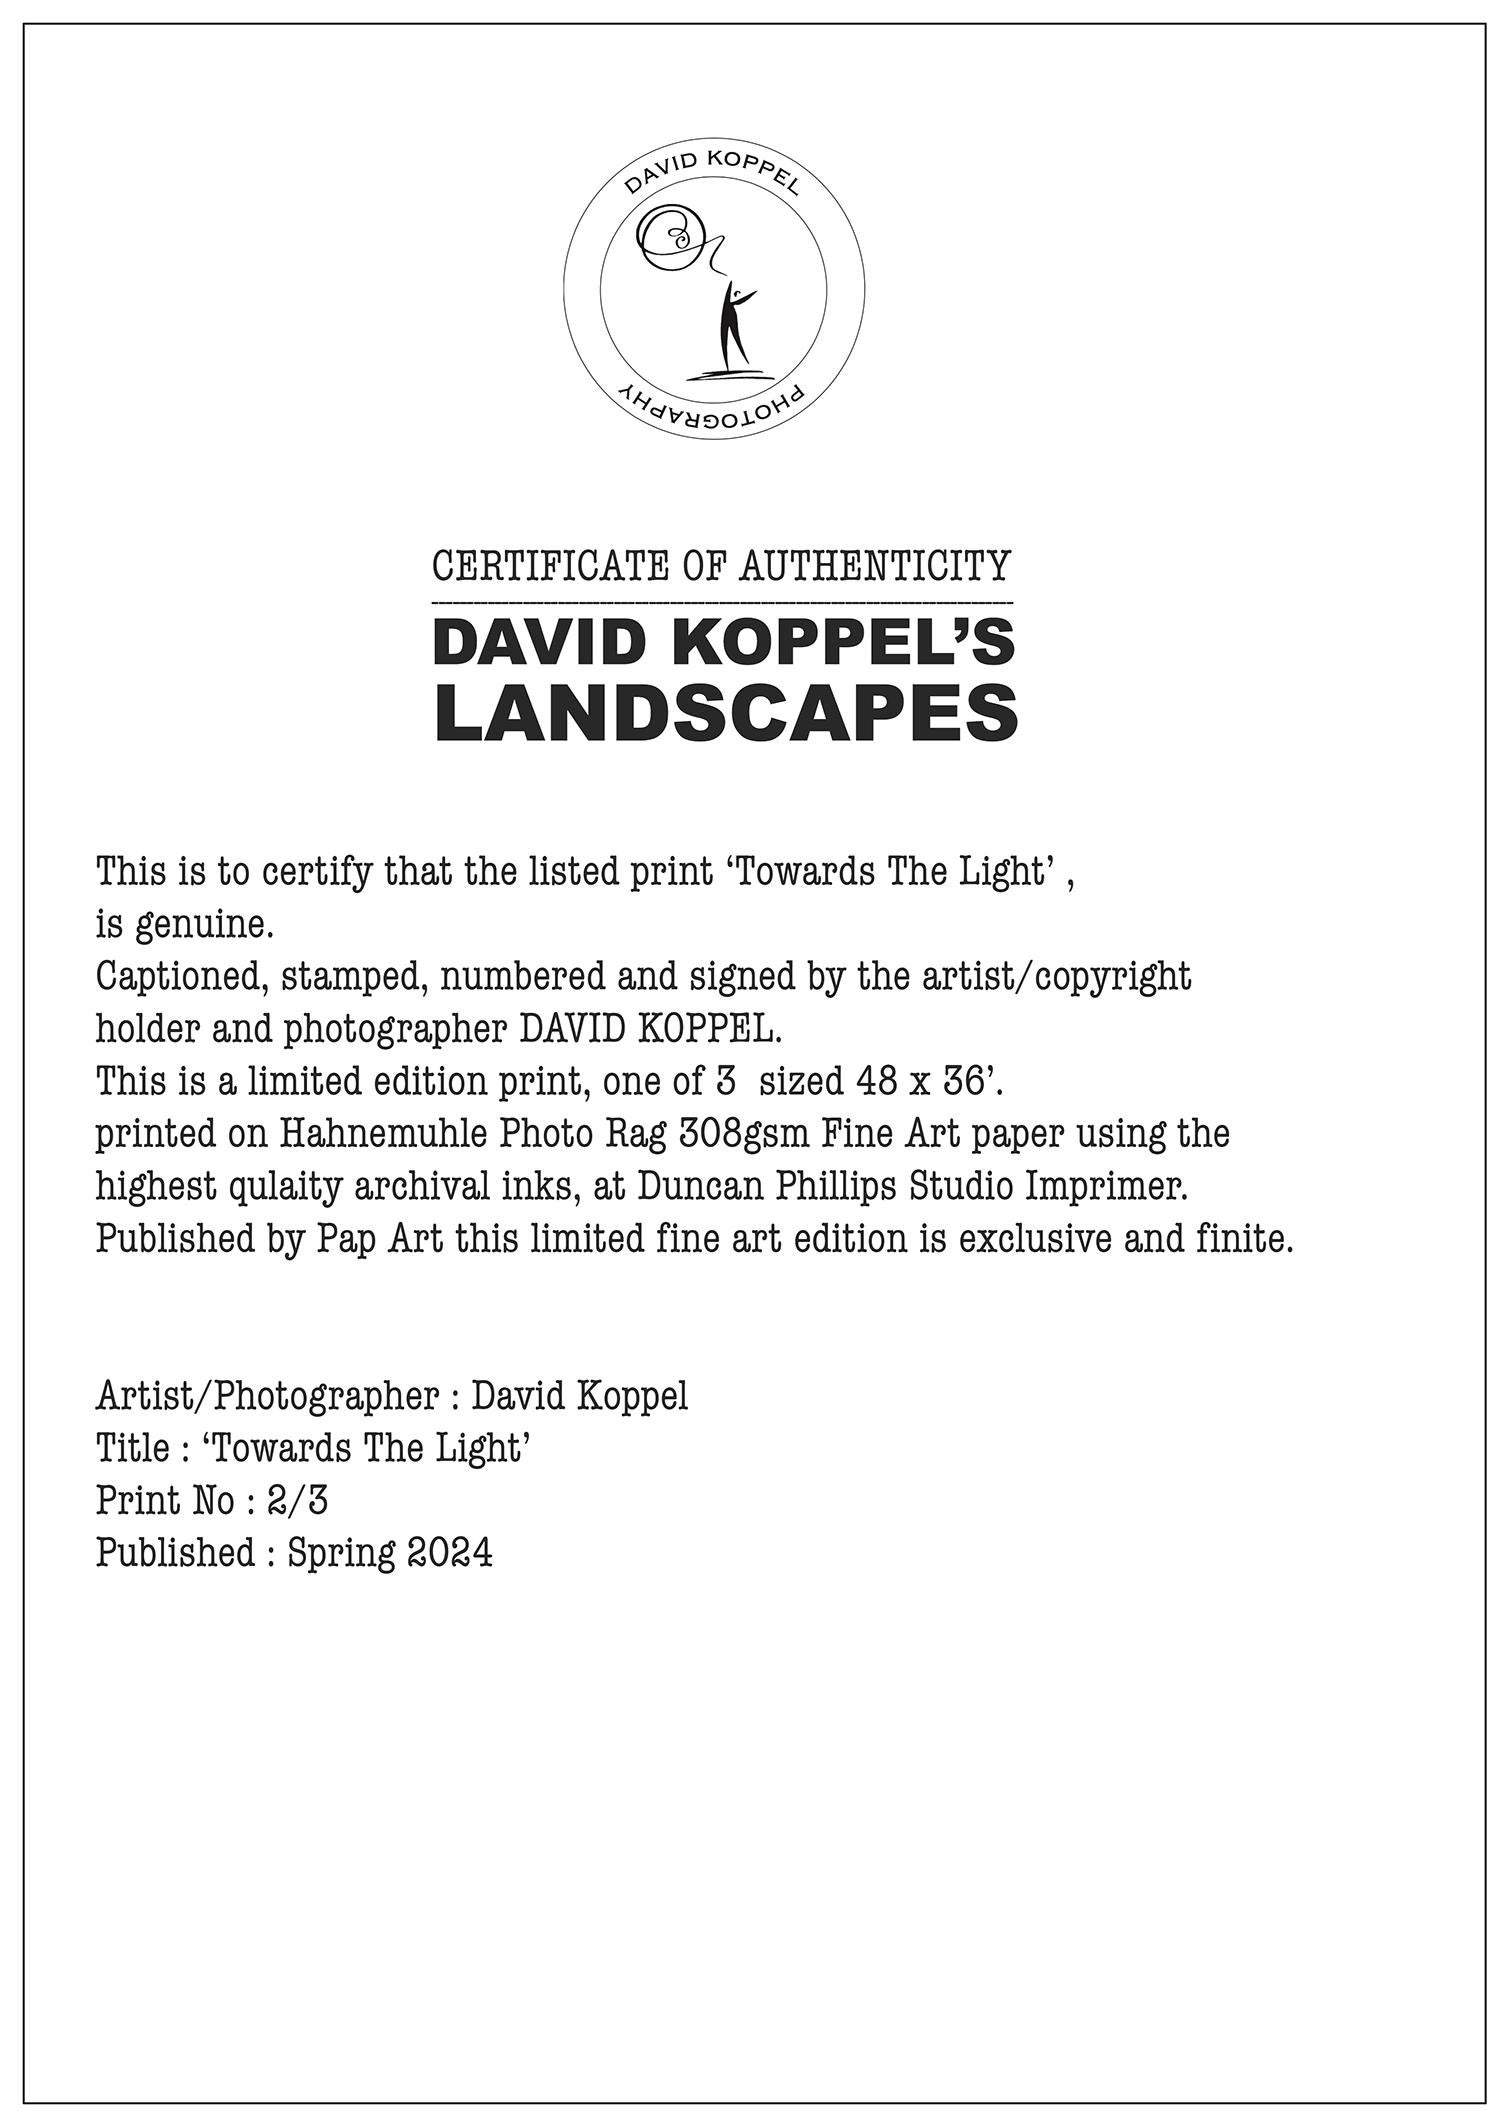 Towards The Light - Black Landscape Photograph by David Koppel